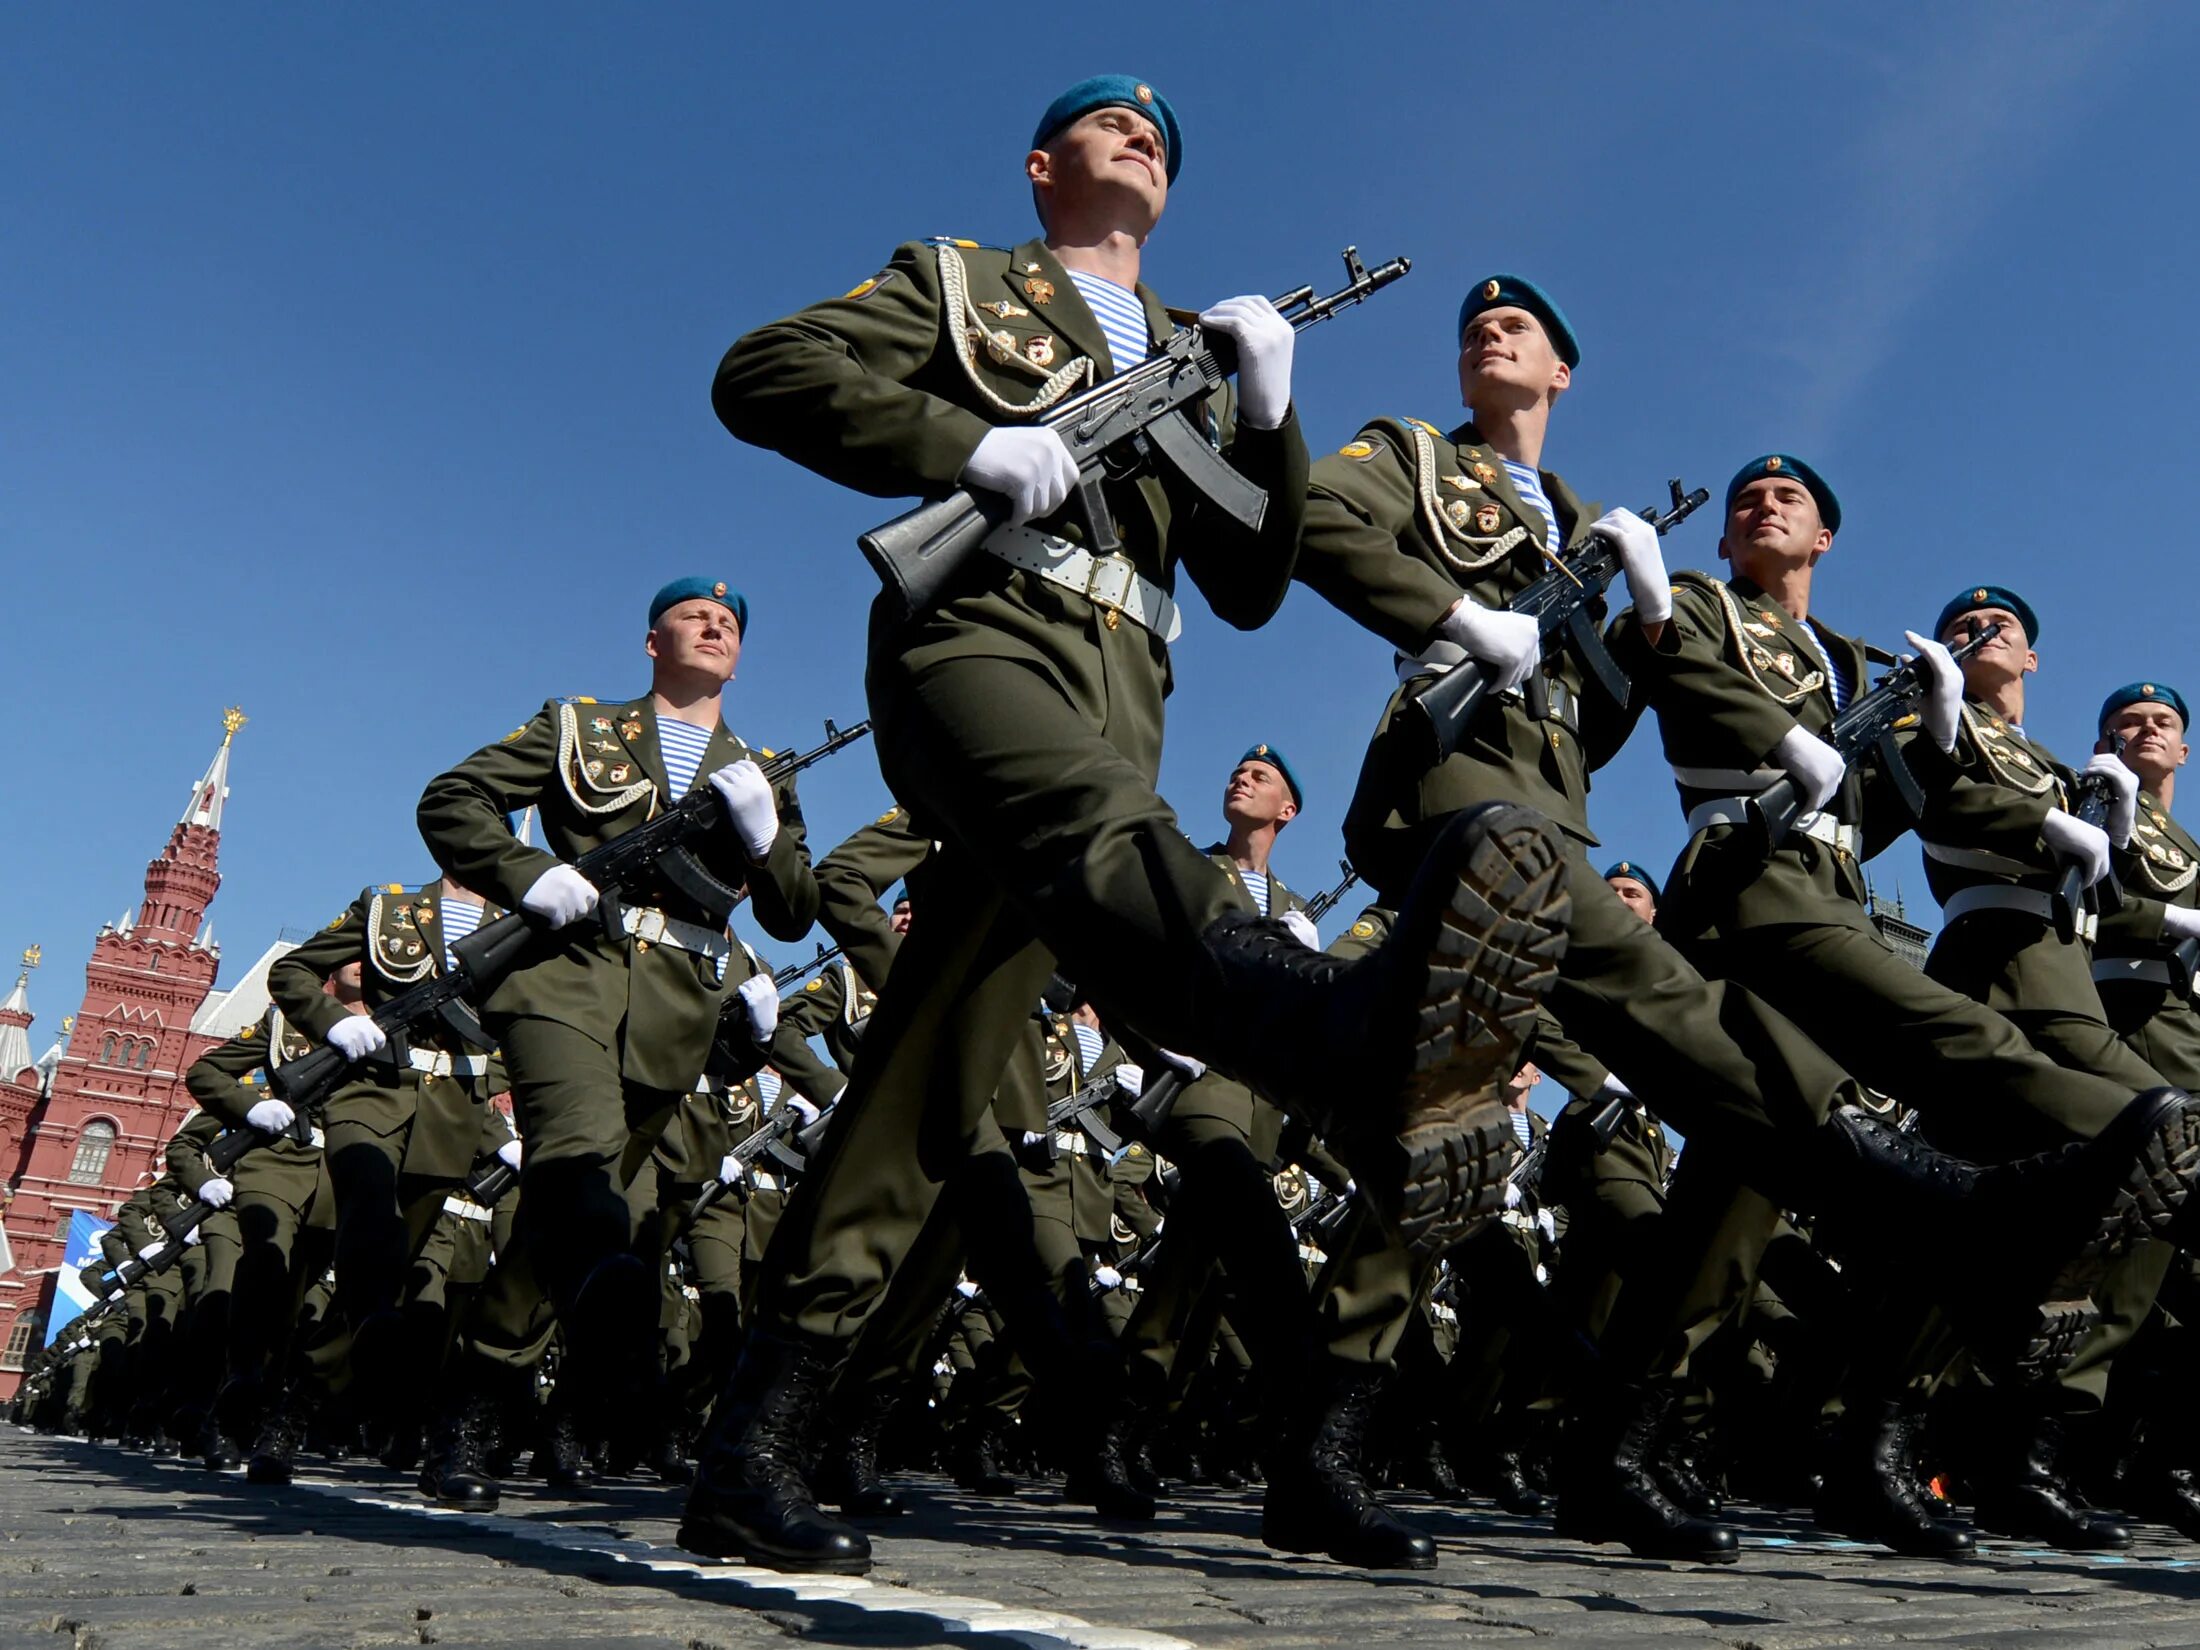 Солдаты на параде. Российский солдат на параде. Мощь Российской армии. Современная армия.